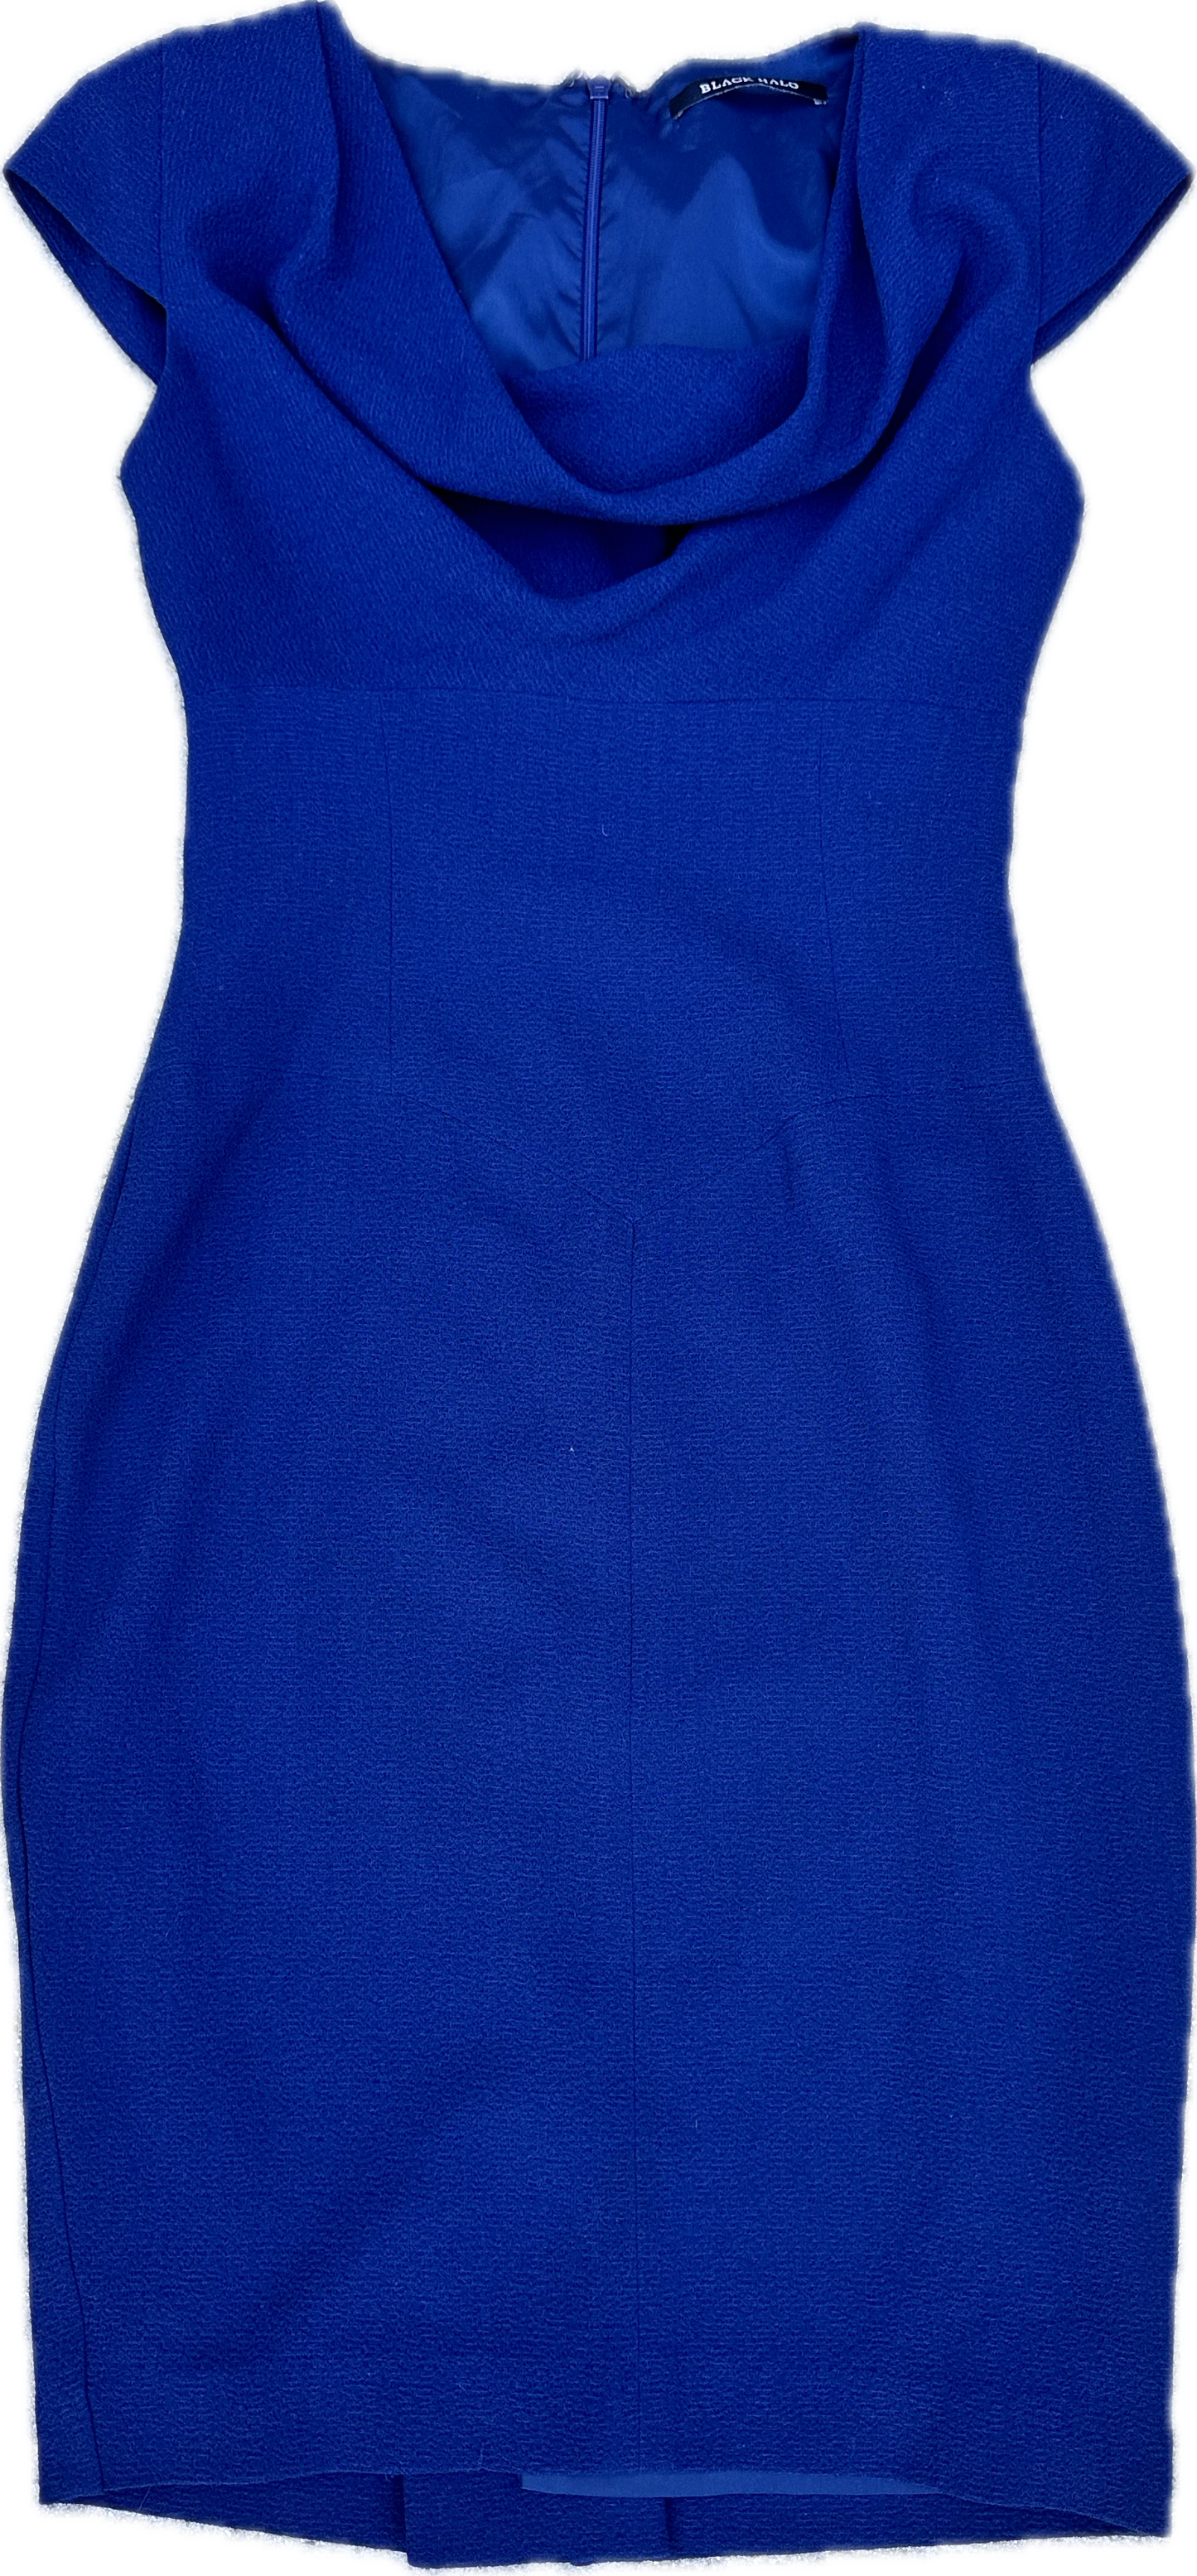 Parks and Recreation: Leslie Knope’s BLACK HALO Blue Dress (6)